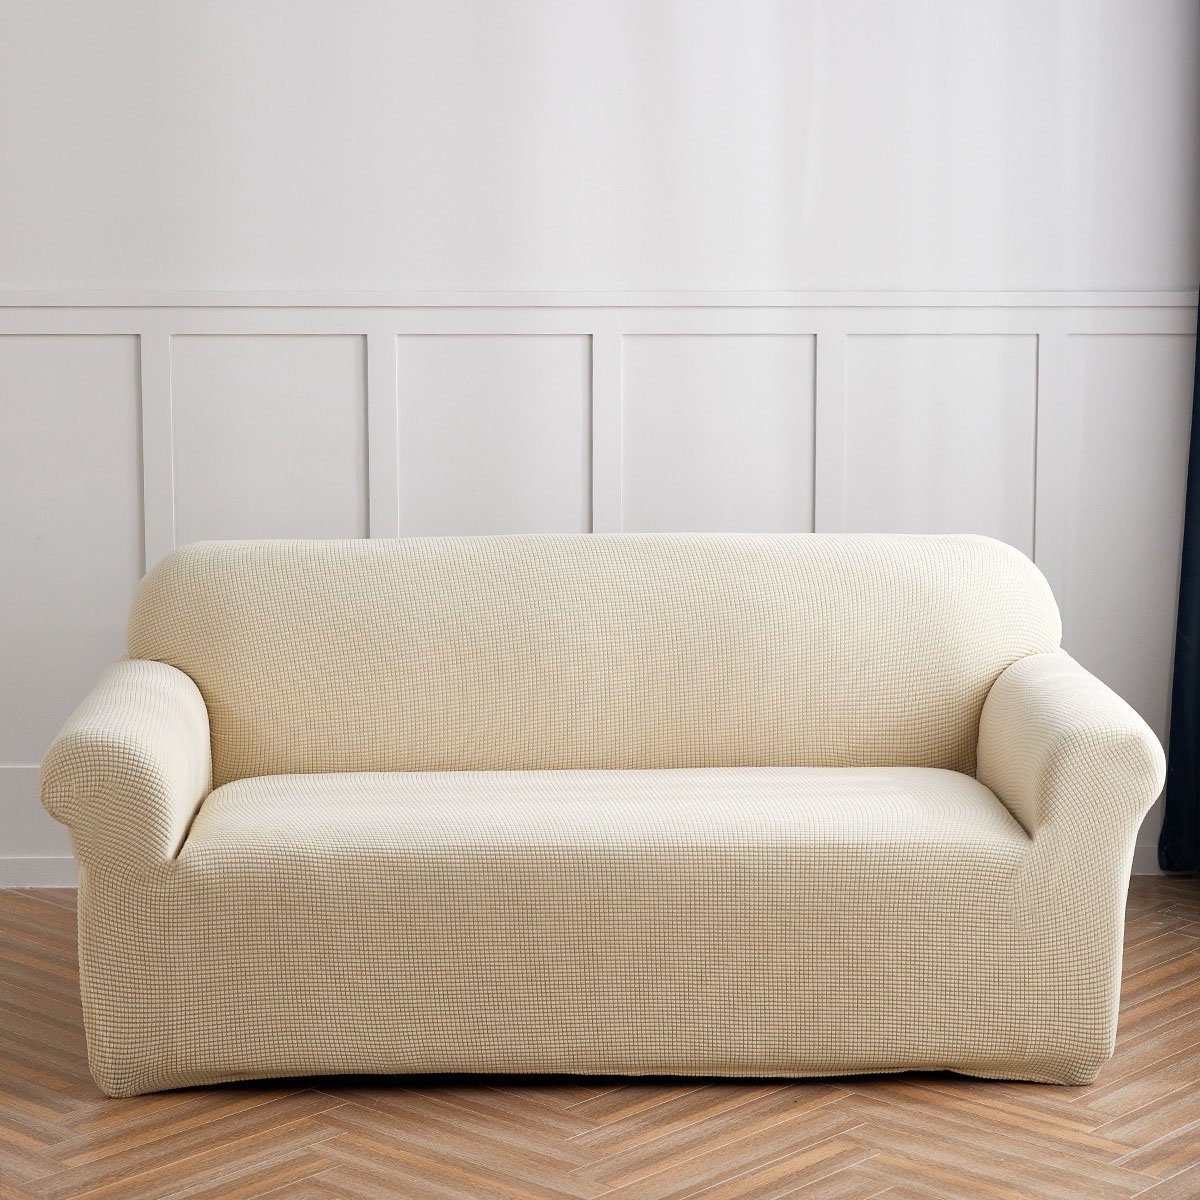 cremefarben, sofa schutzhülle fit CTGtree elastischer Sofahusse waschbar